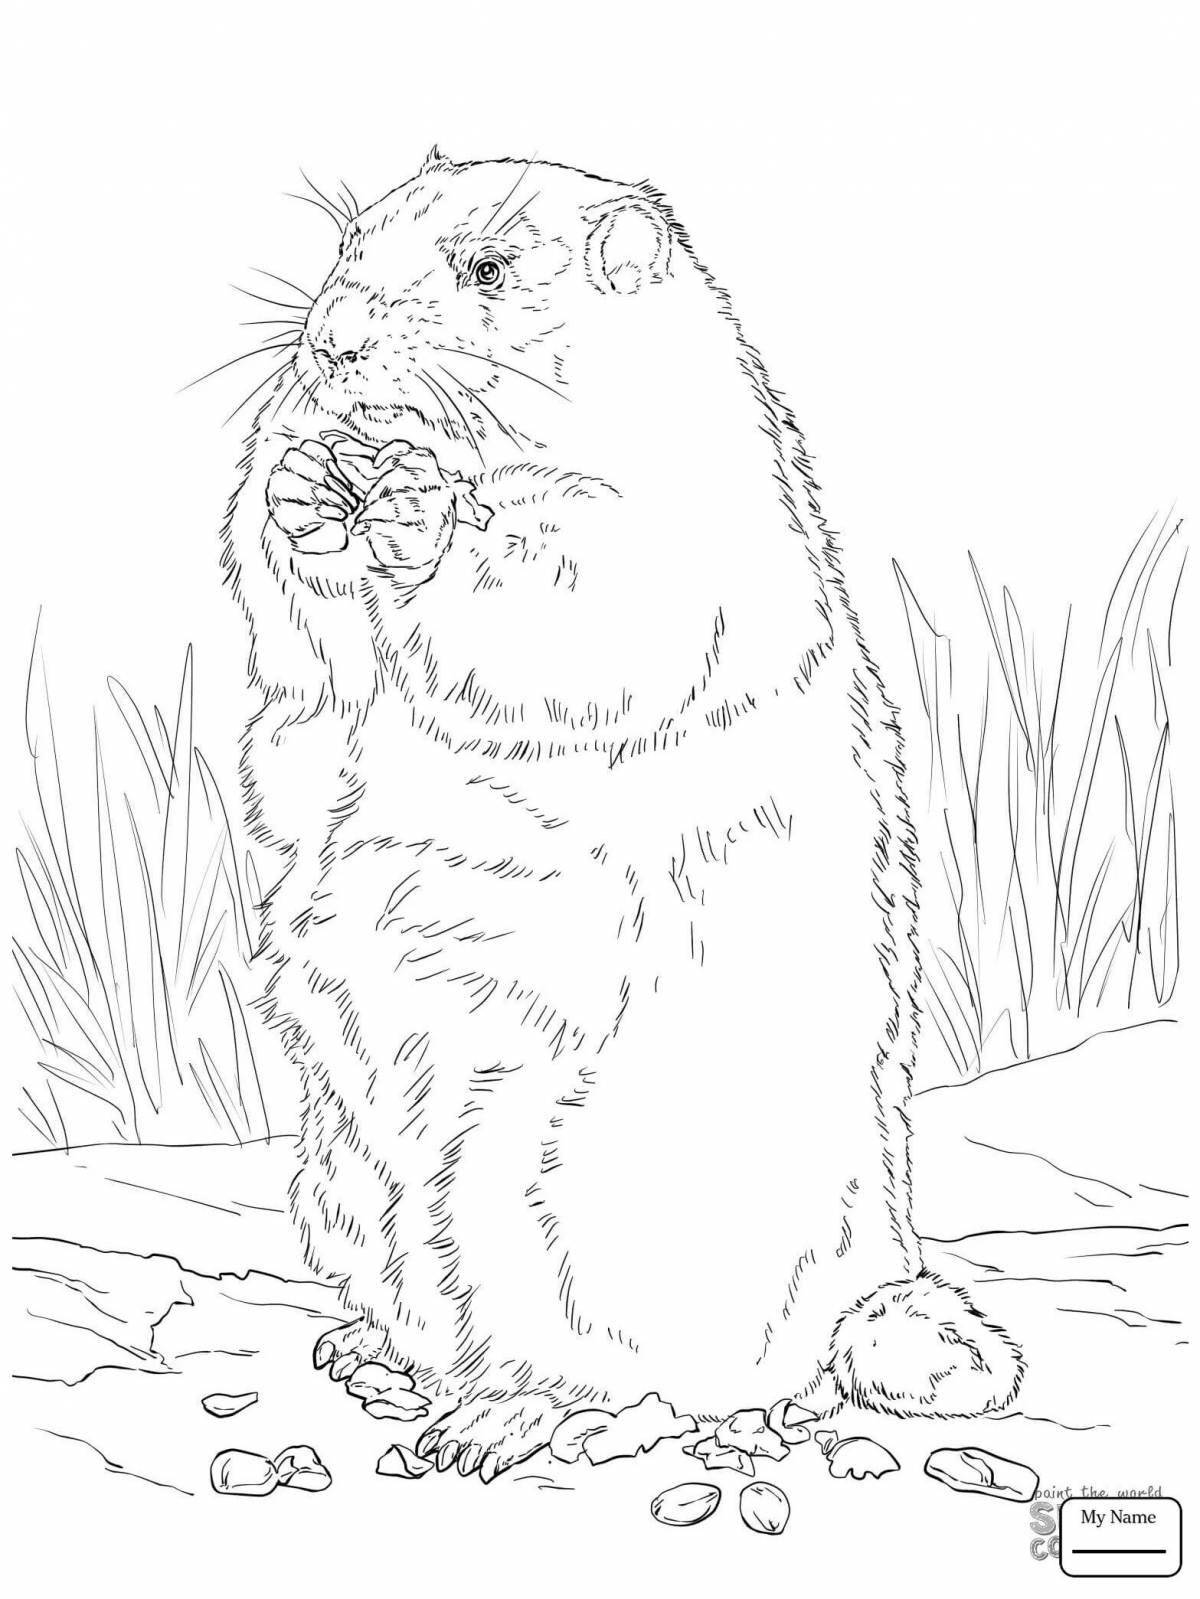 Adorable groundhog coloring page